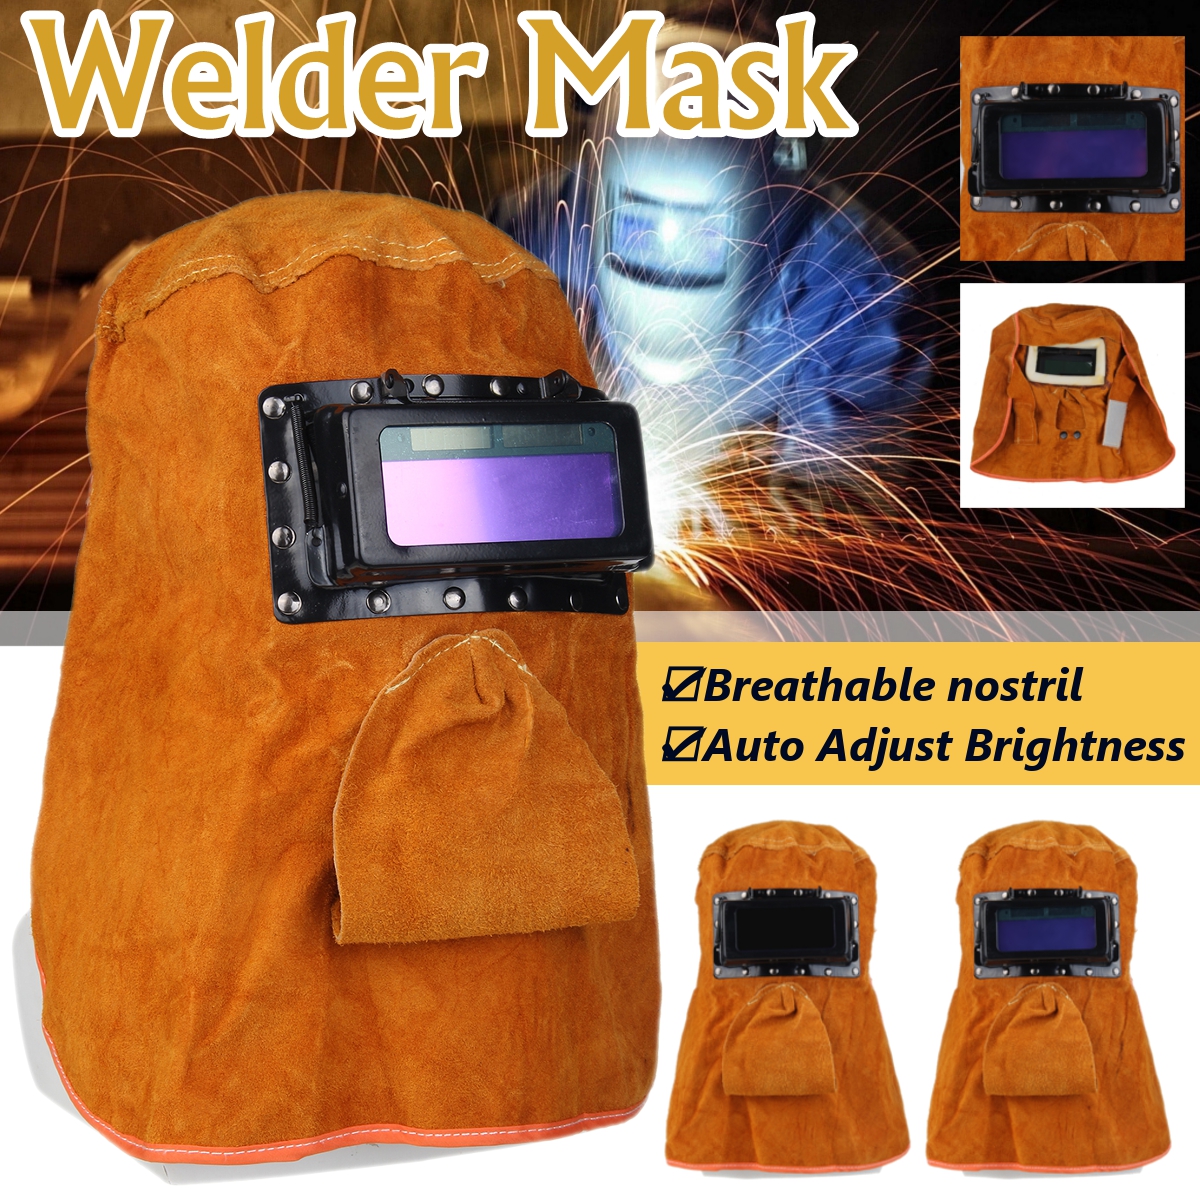 Solar-Auto-Darkening-Filter-Lens-Welder-Leather-Hood-Breathable-Helmet-Mask-with-Glasses-1924045-1